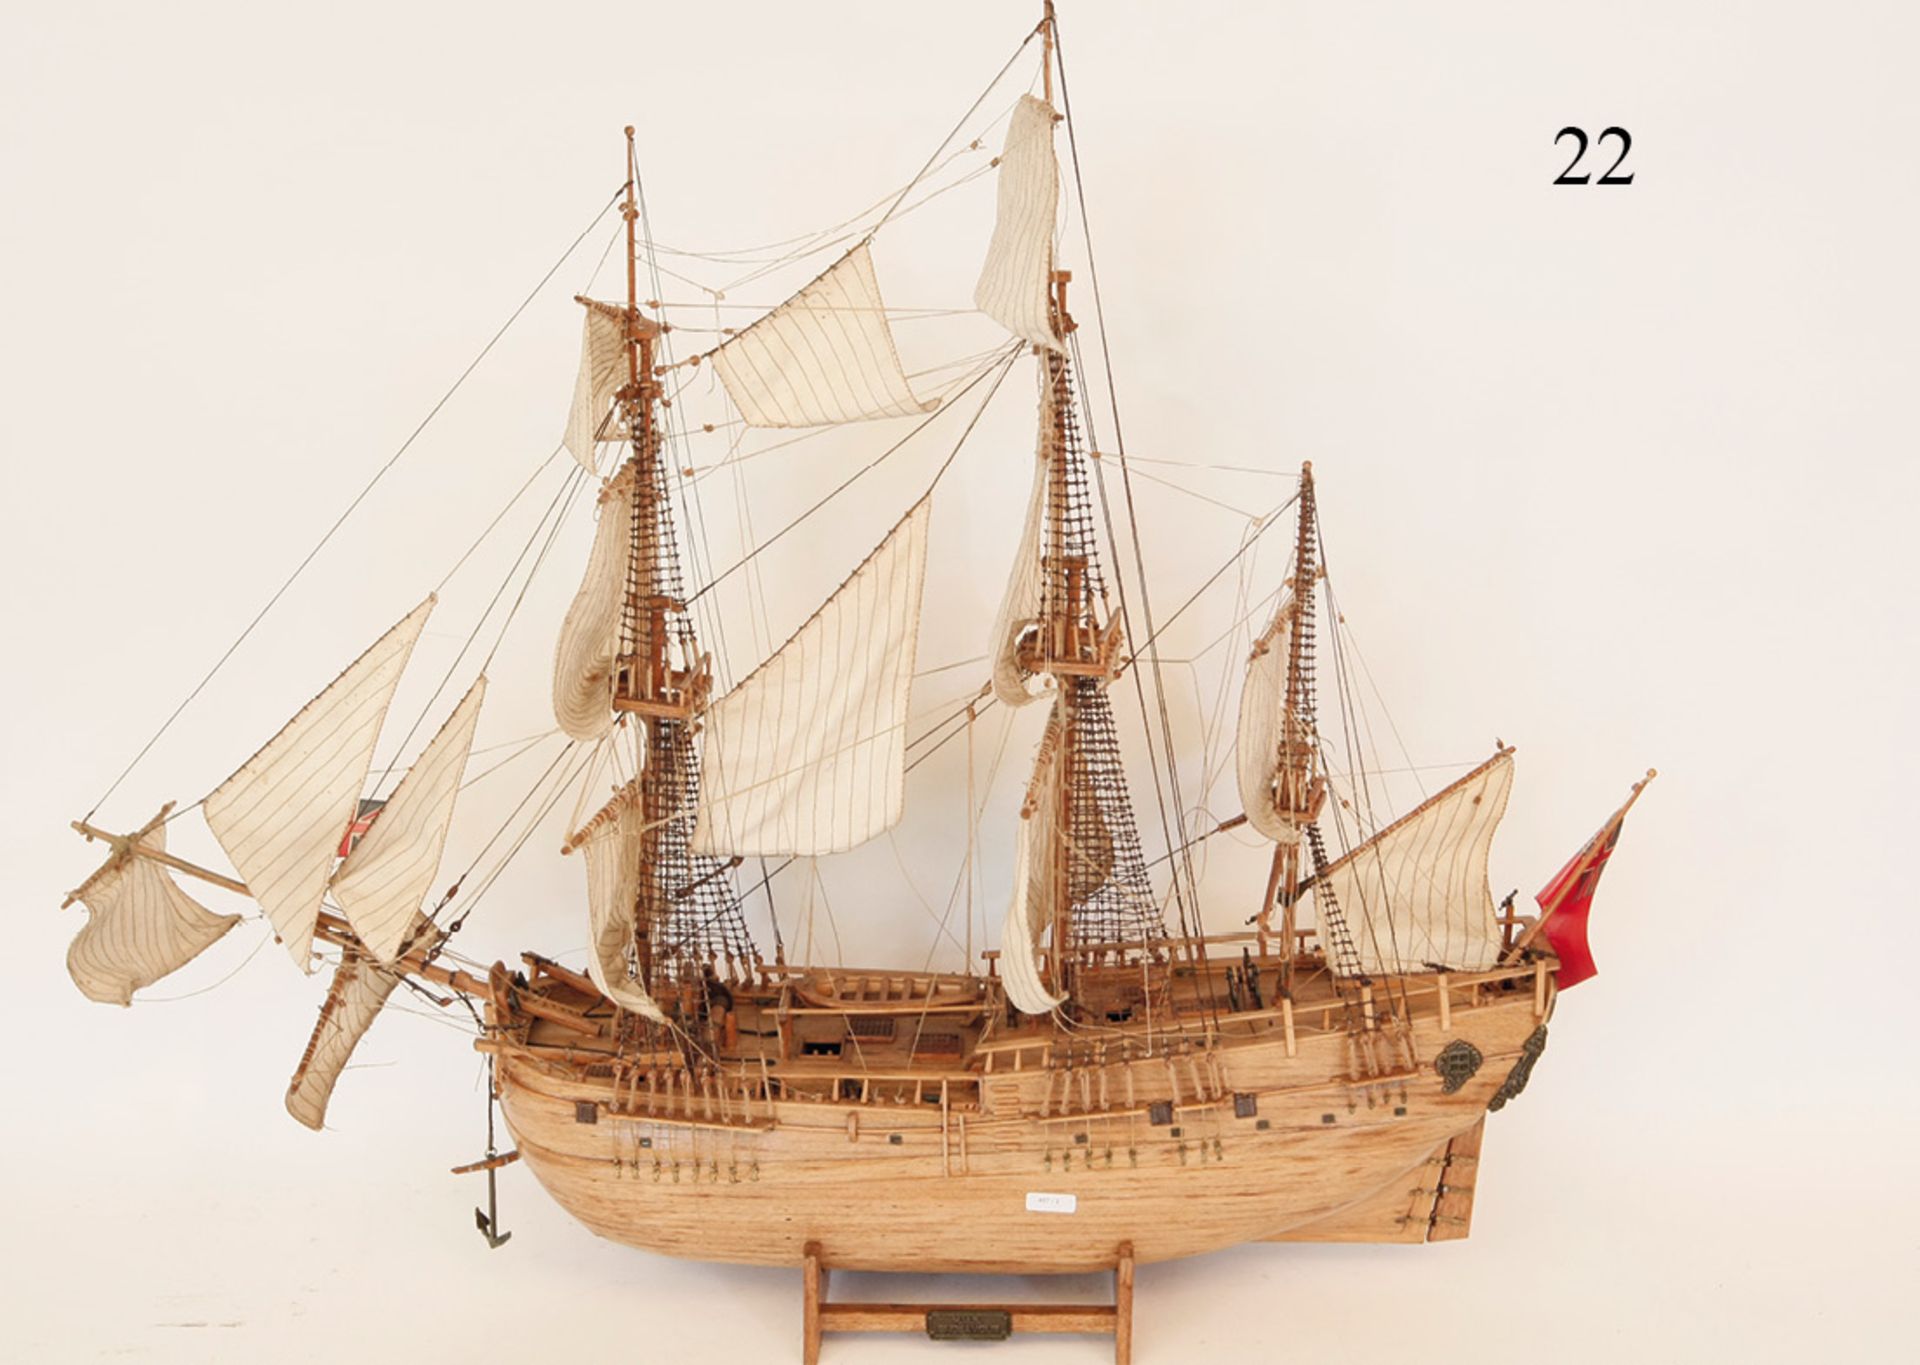 Schiffsmodell "Endeavour" 1778